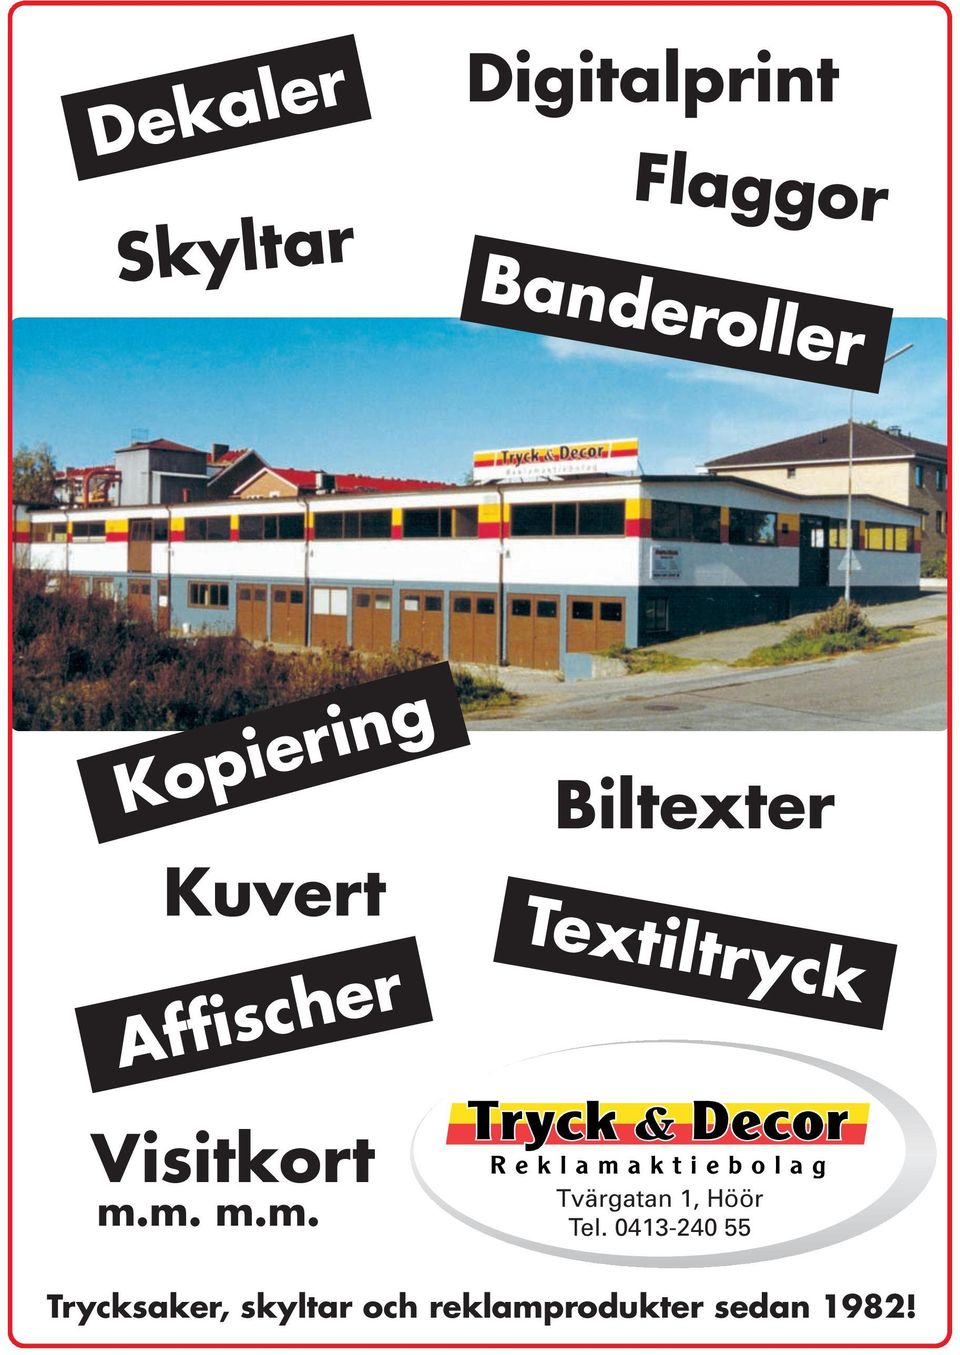 m. m.m. Biltexter Textiltryck Tvärgatan 1, Höör Tel.